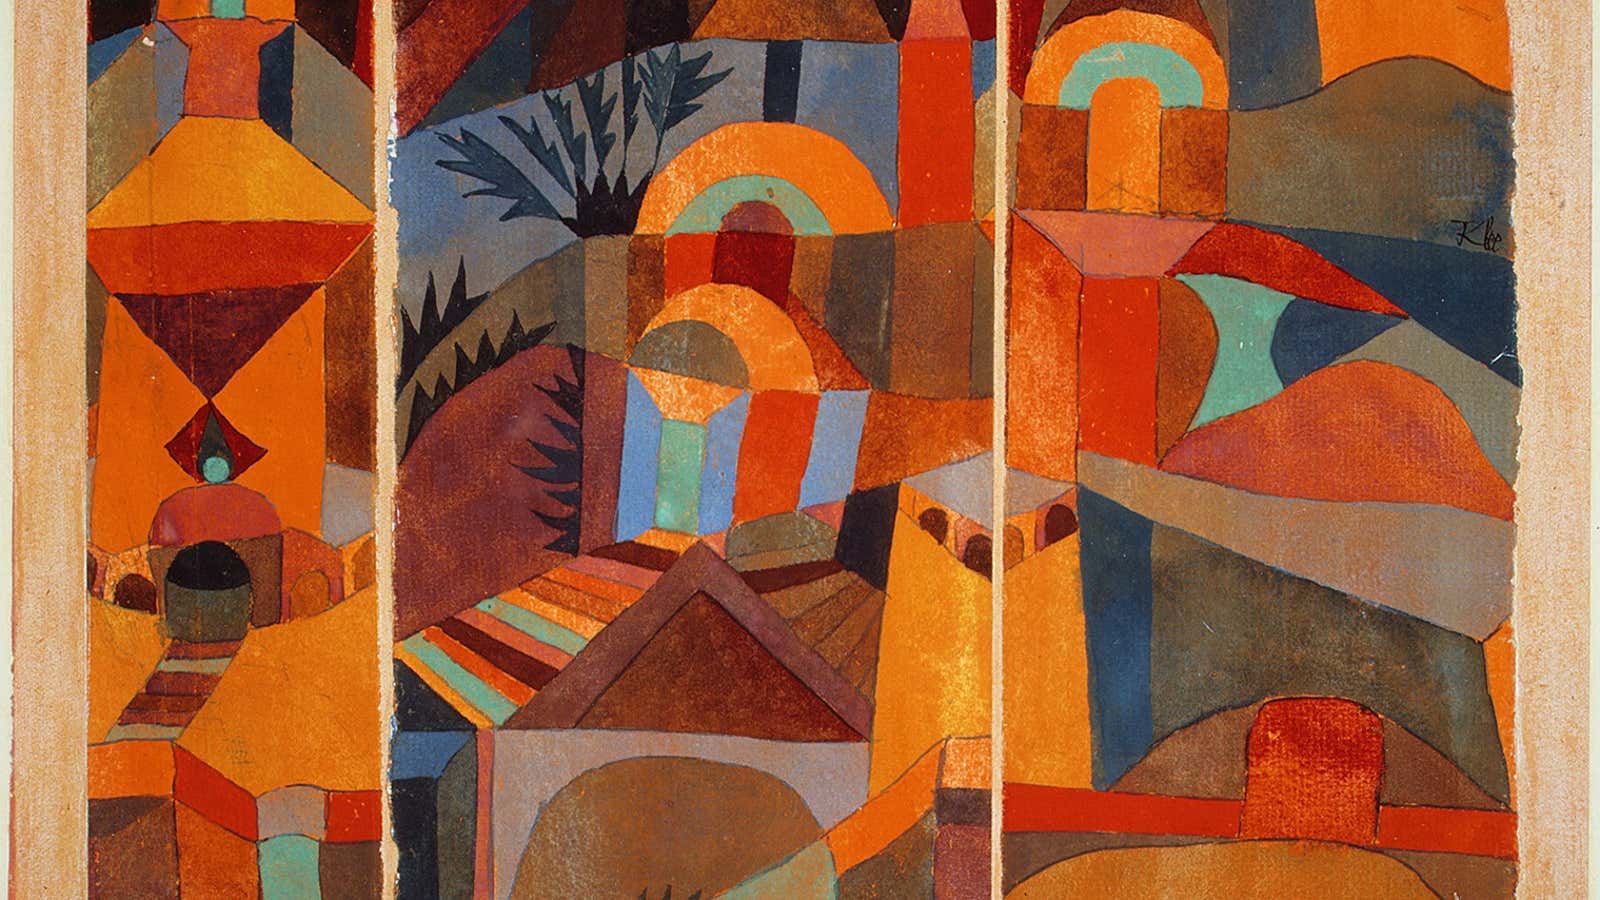 Paul Klee’s Temple Gardens, painted in 1920.